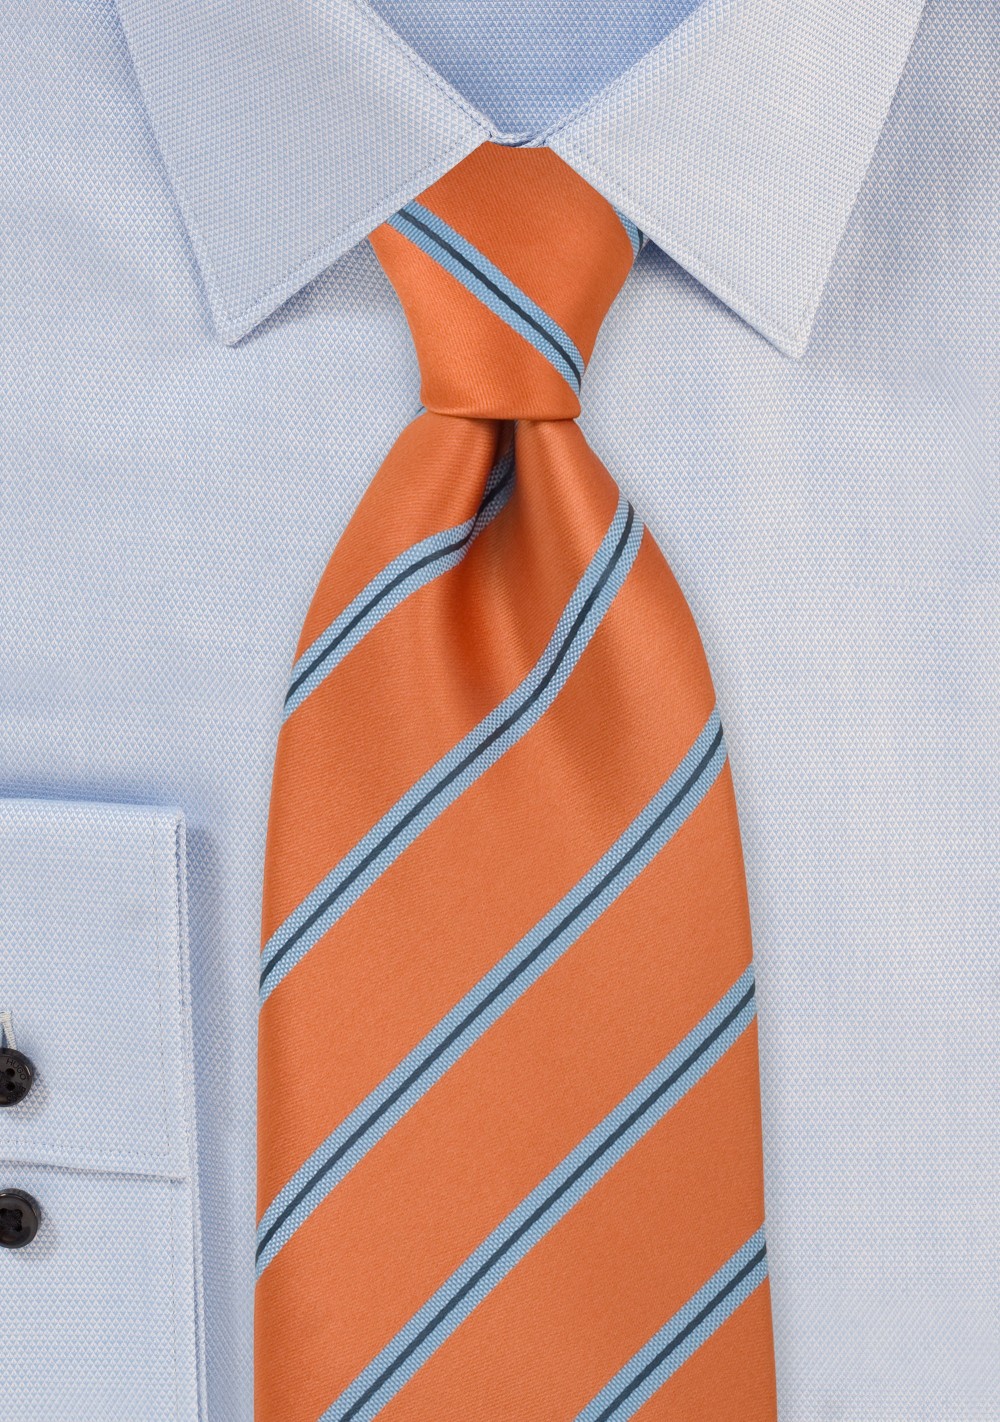 Narrow Striped Tie Orange Light Blue